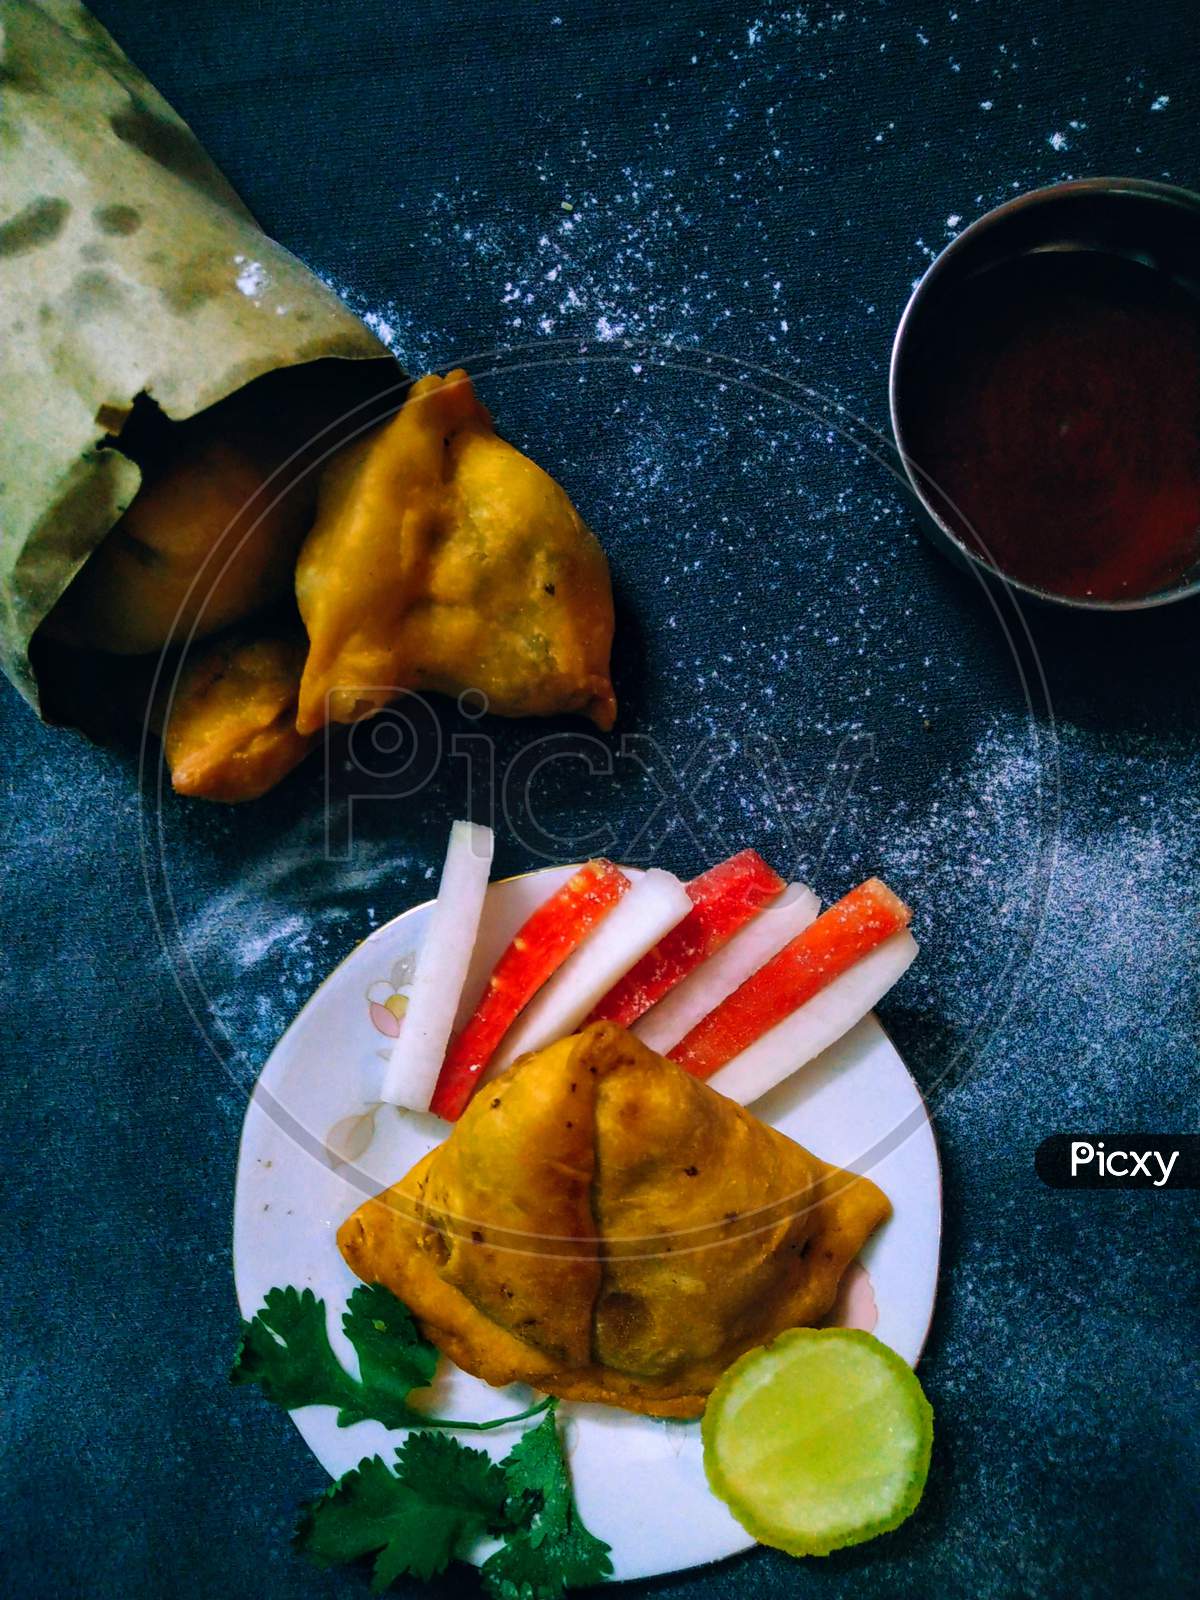 tasty, crispy, streetfood samosa